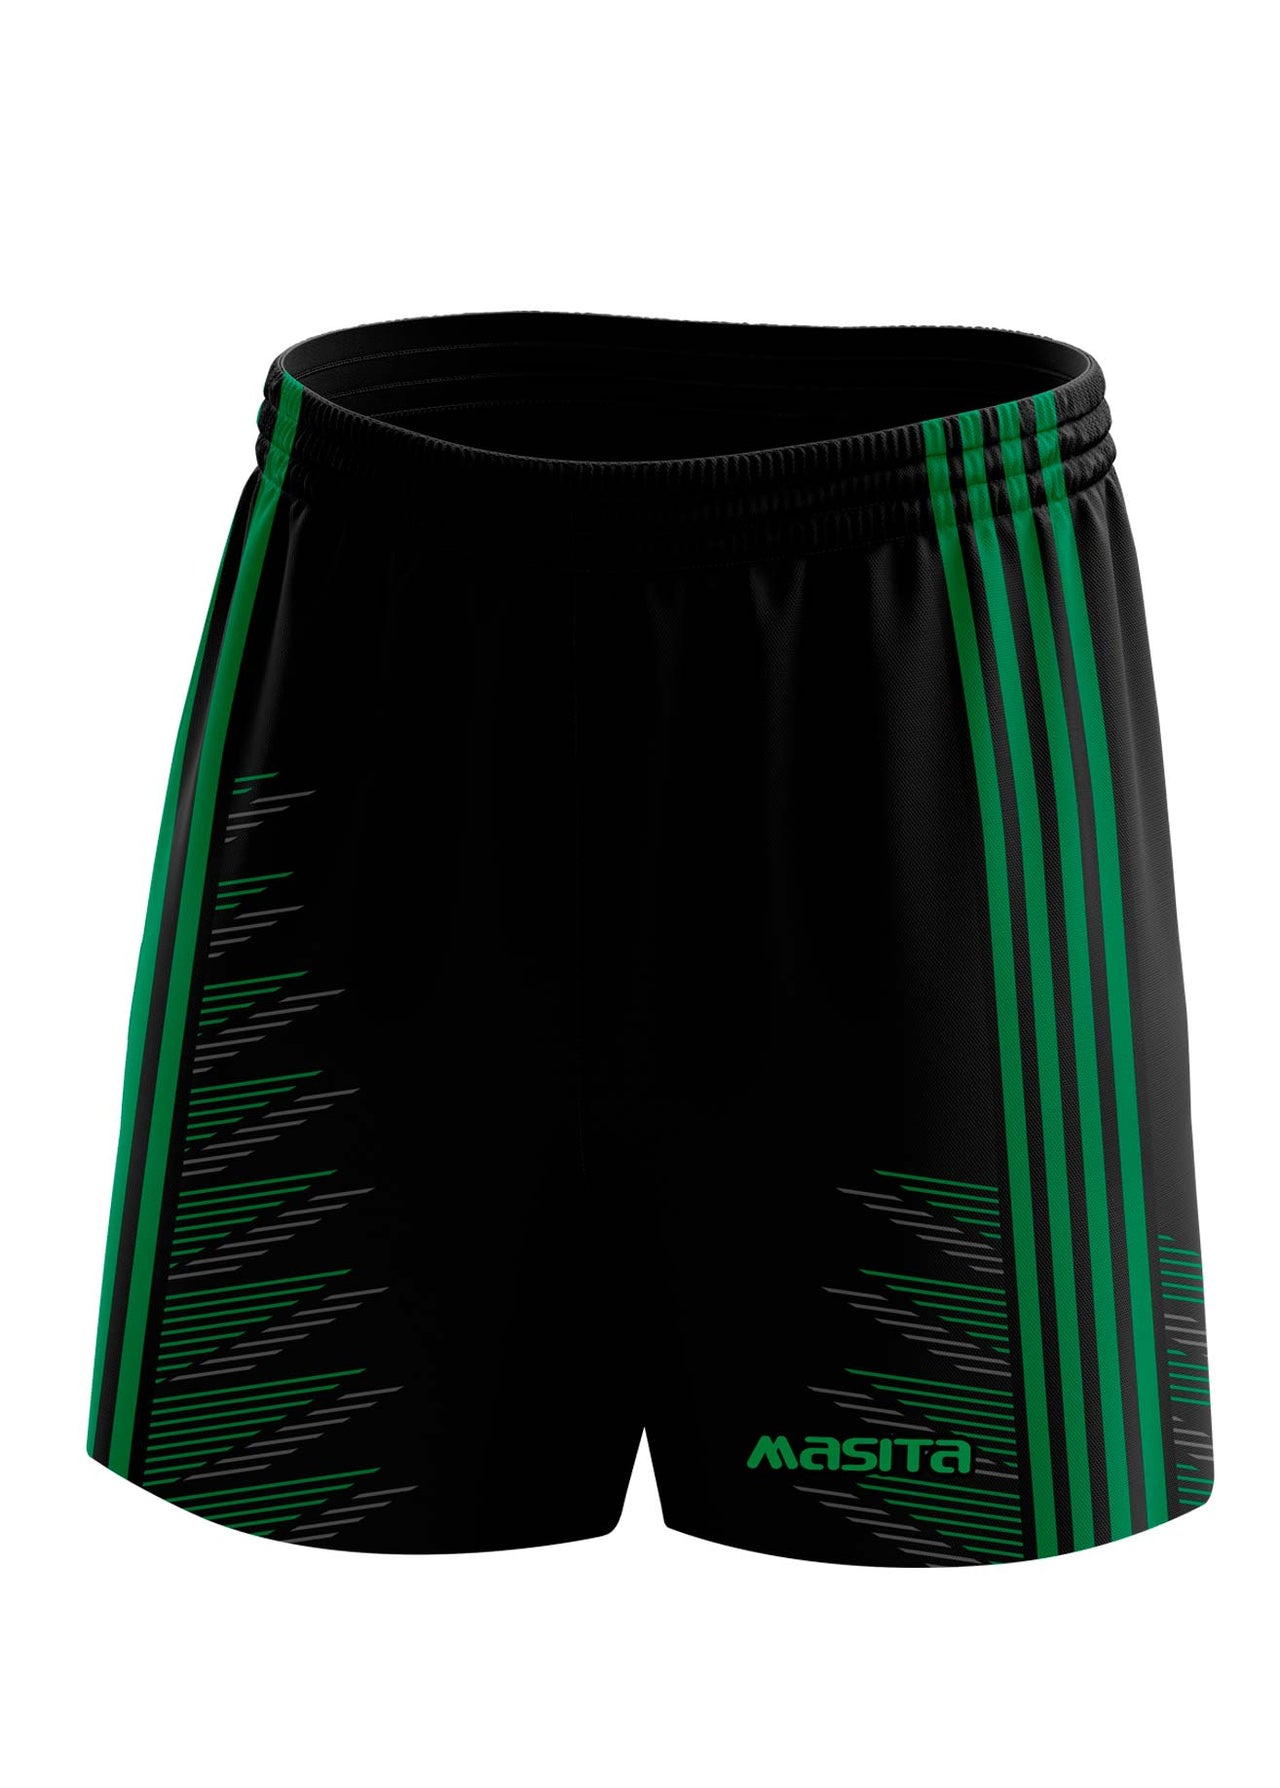 Hydro Gaelic Shorts Black/Green Adult